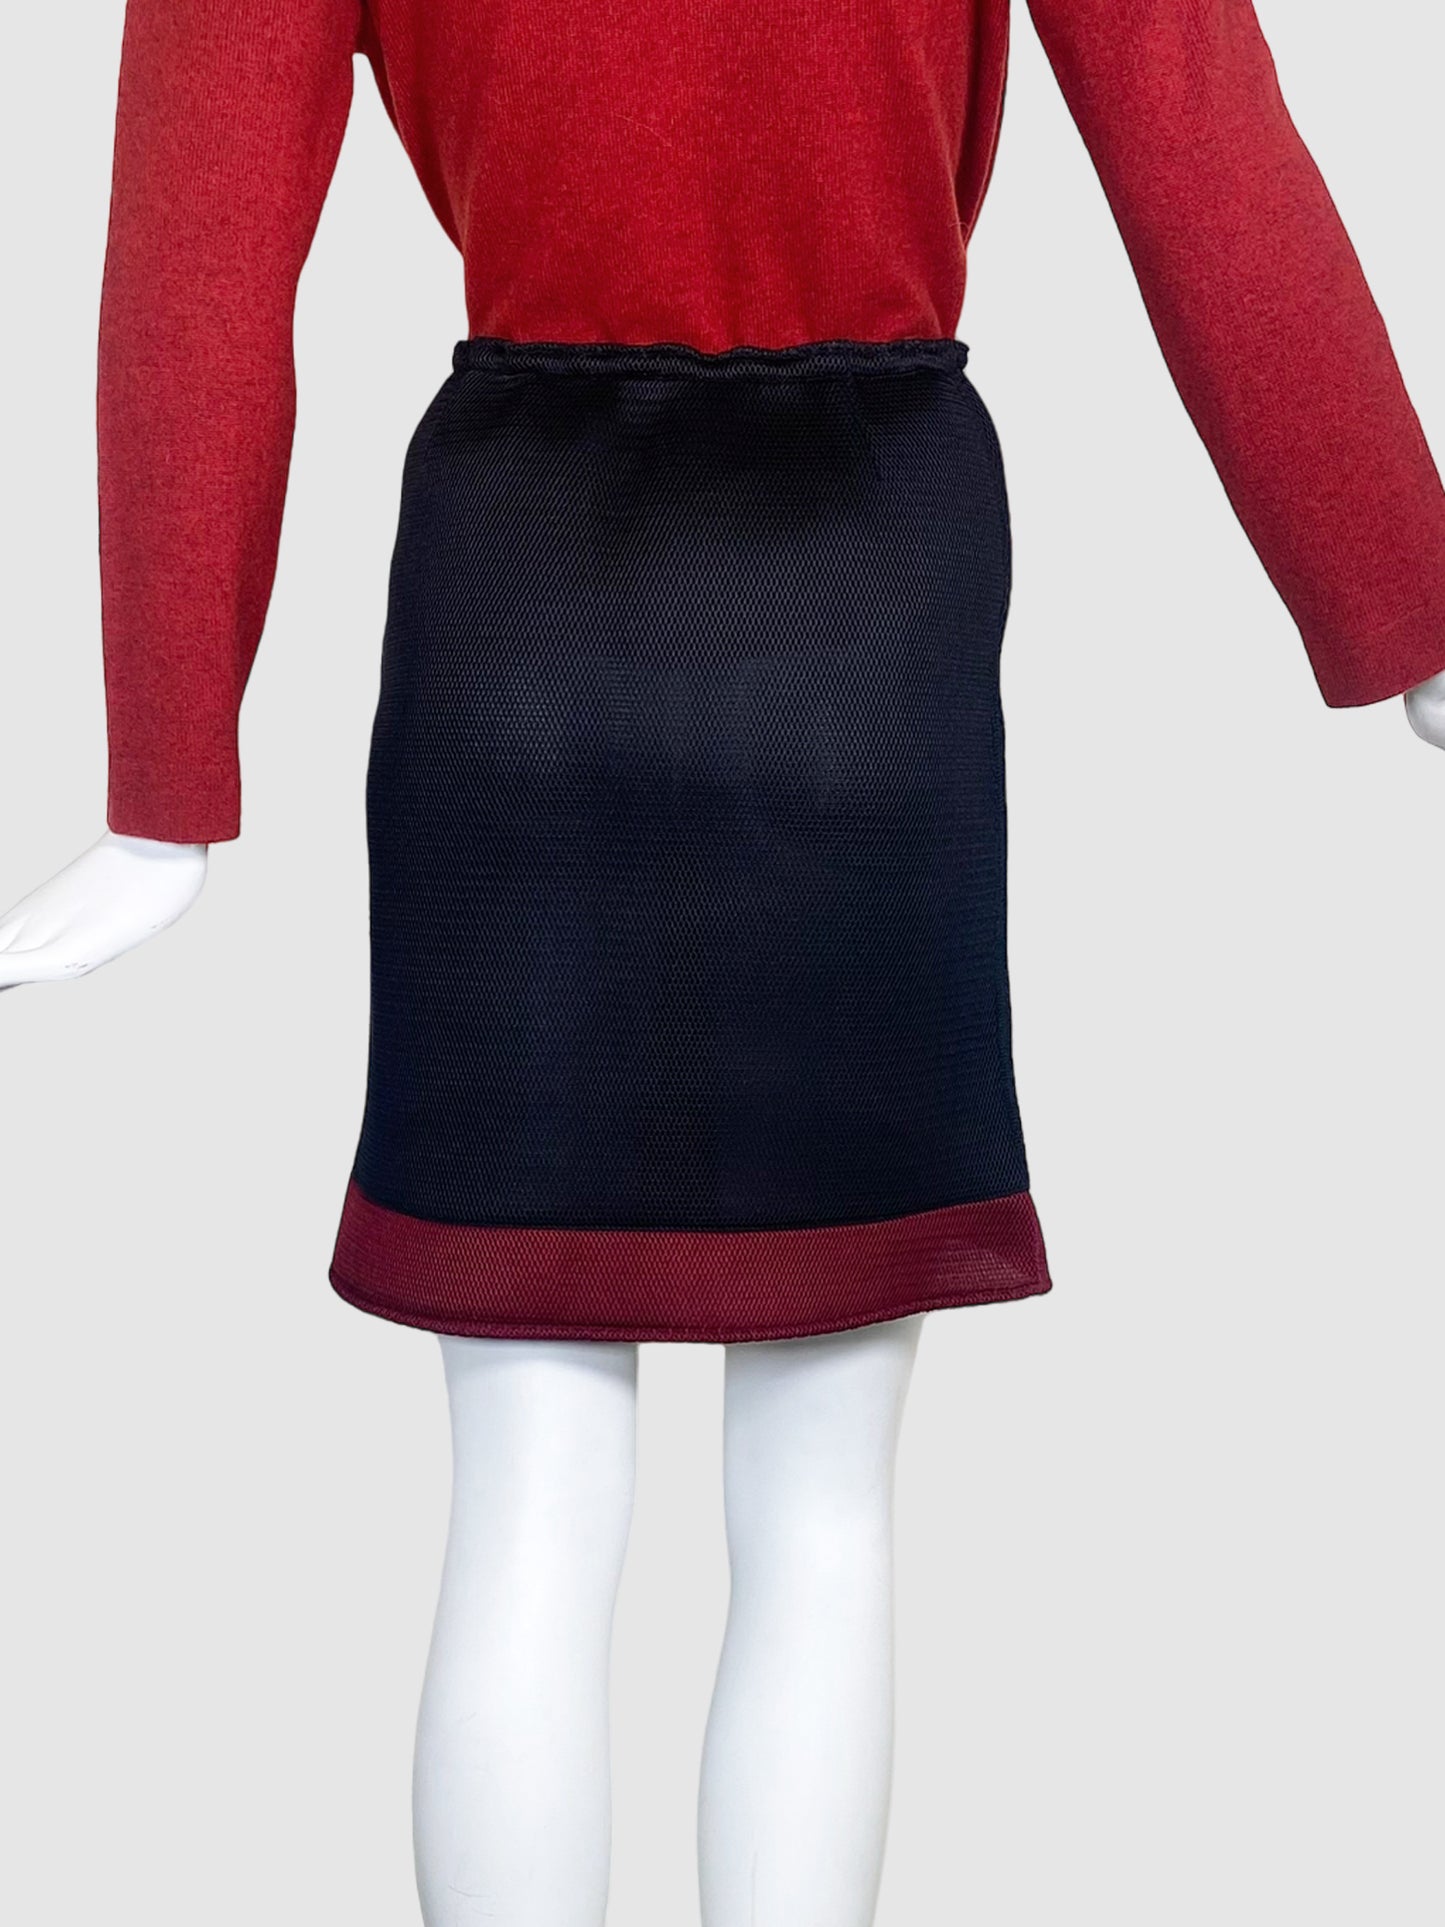 Miu Miu Burgundy Trim Mini Skirt - Size M